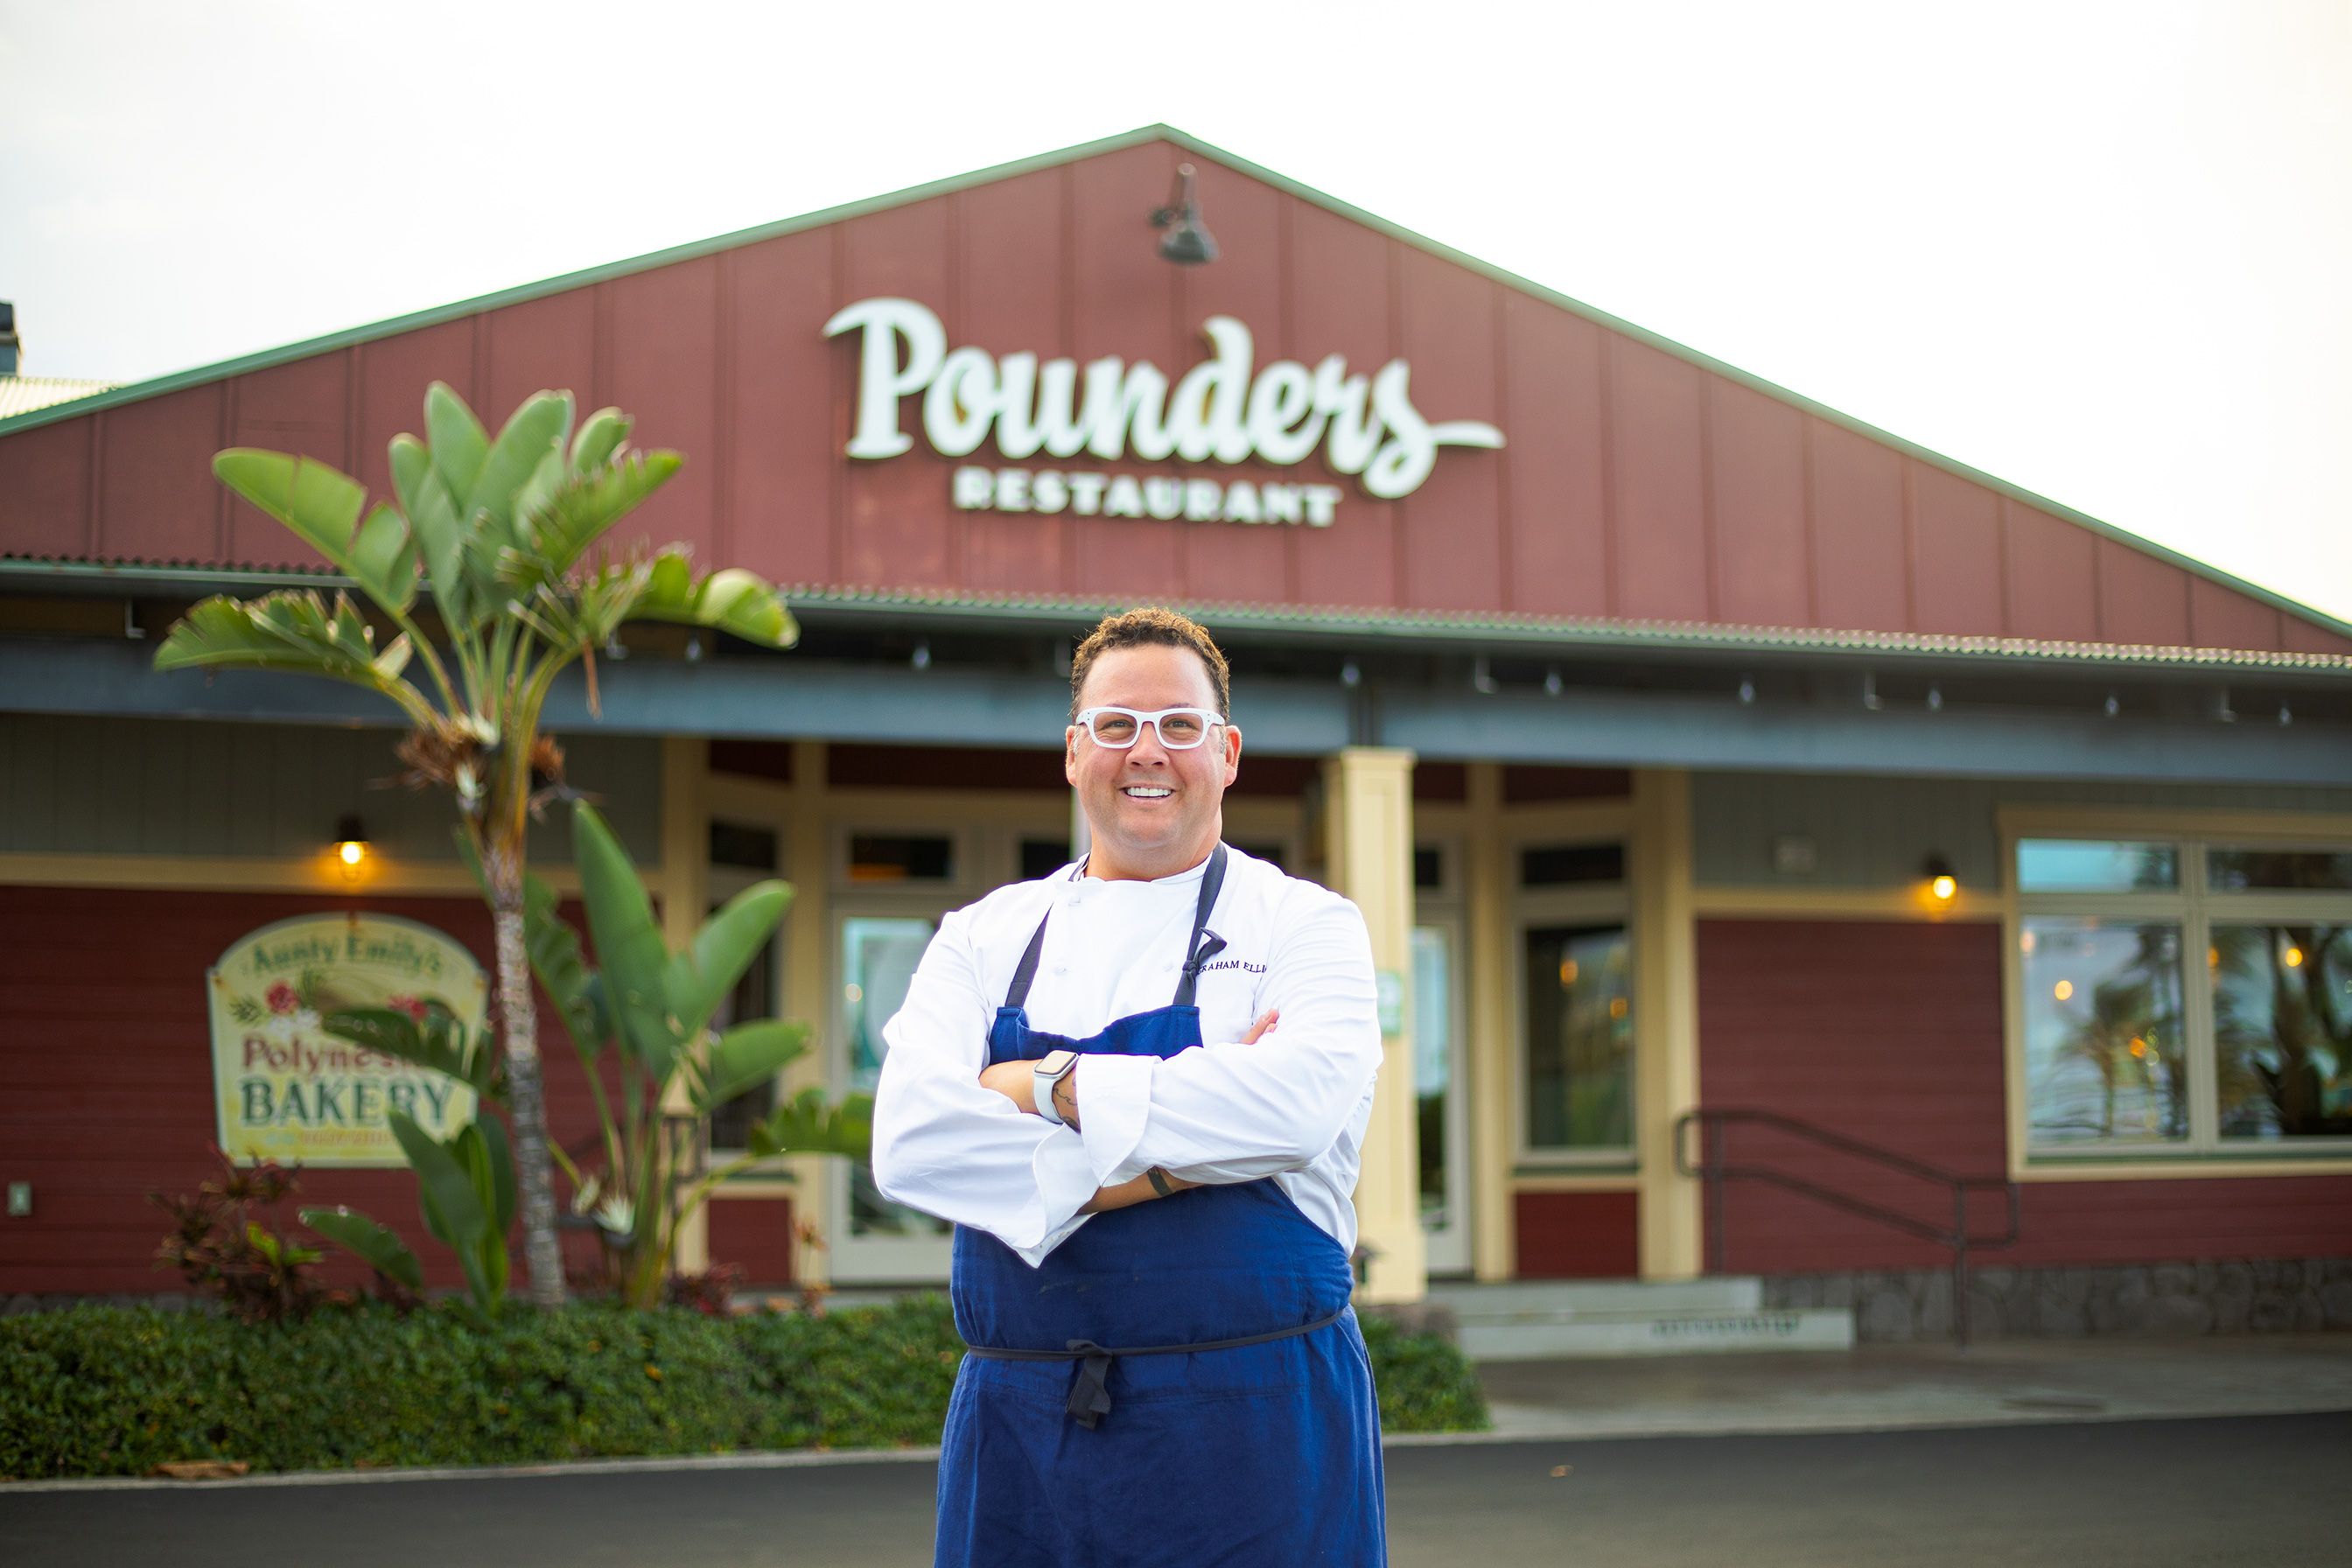 Pounders Restaurant